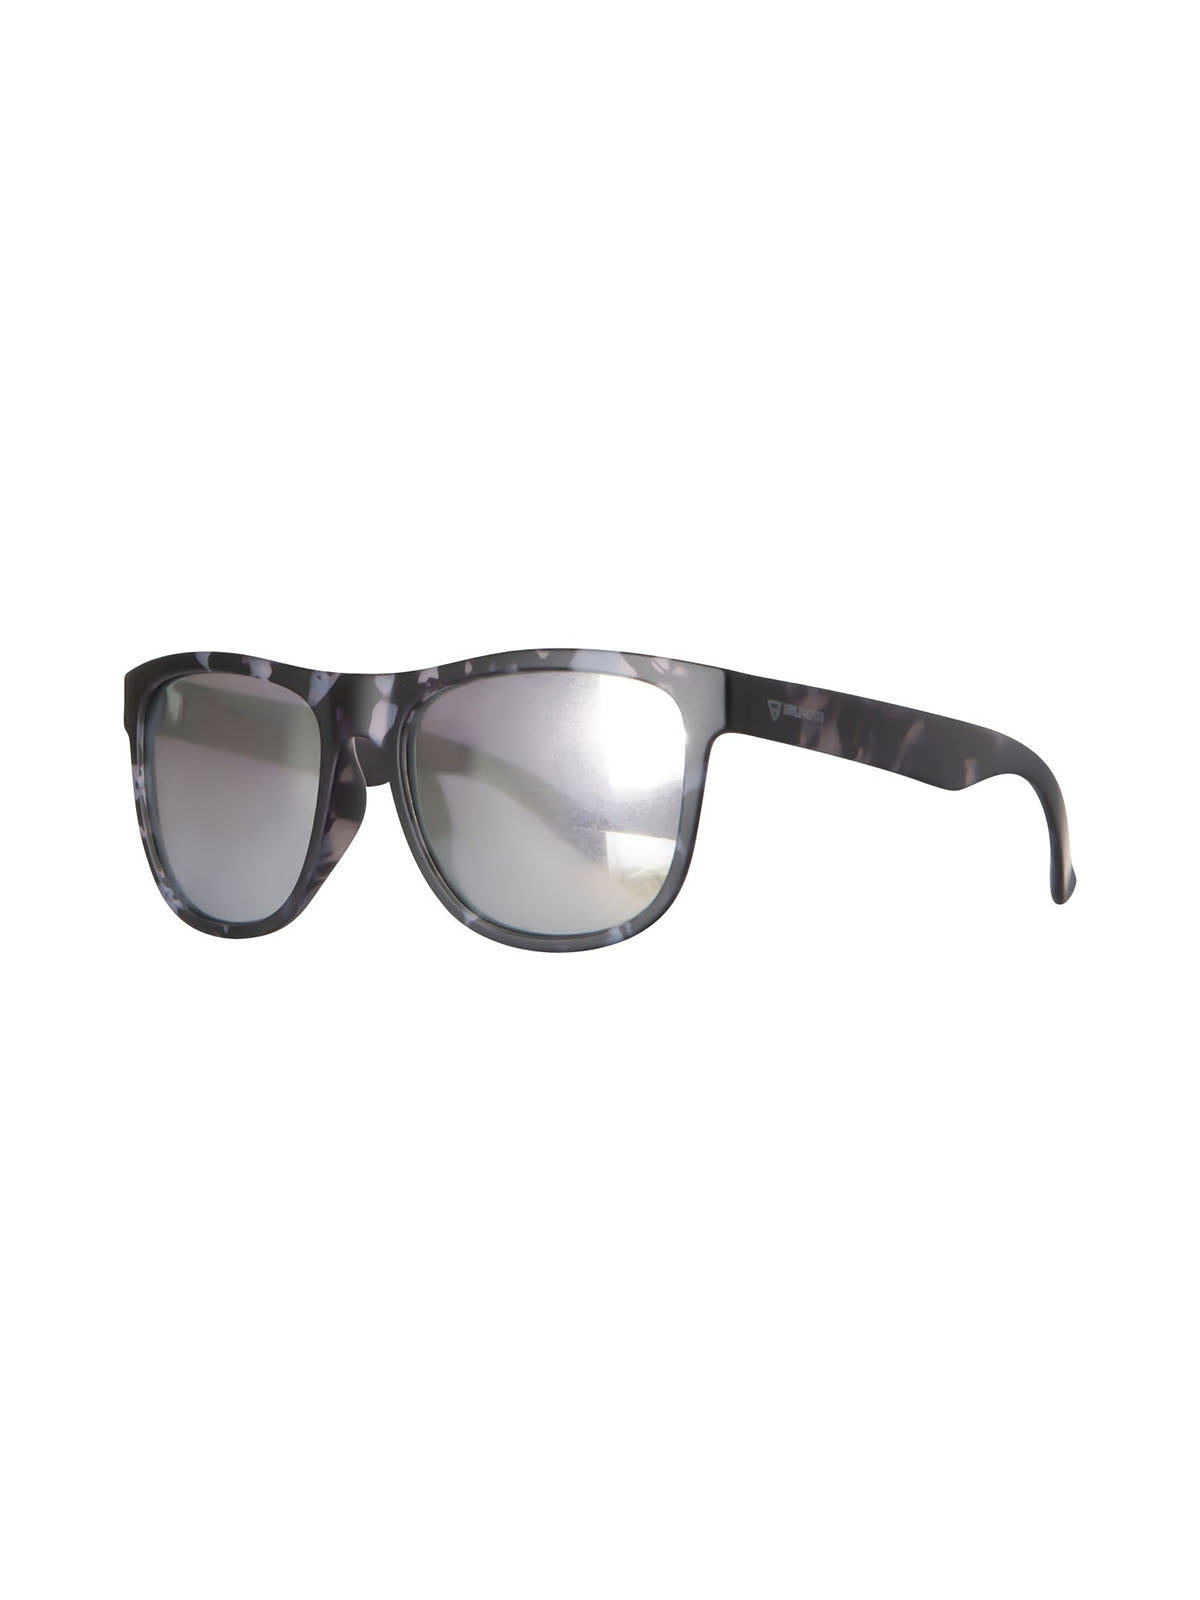 Trichonis 2 Men Sunglasses | Grey